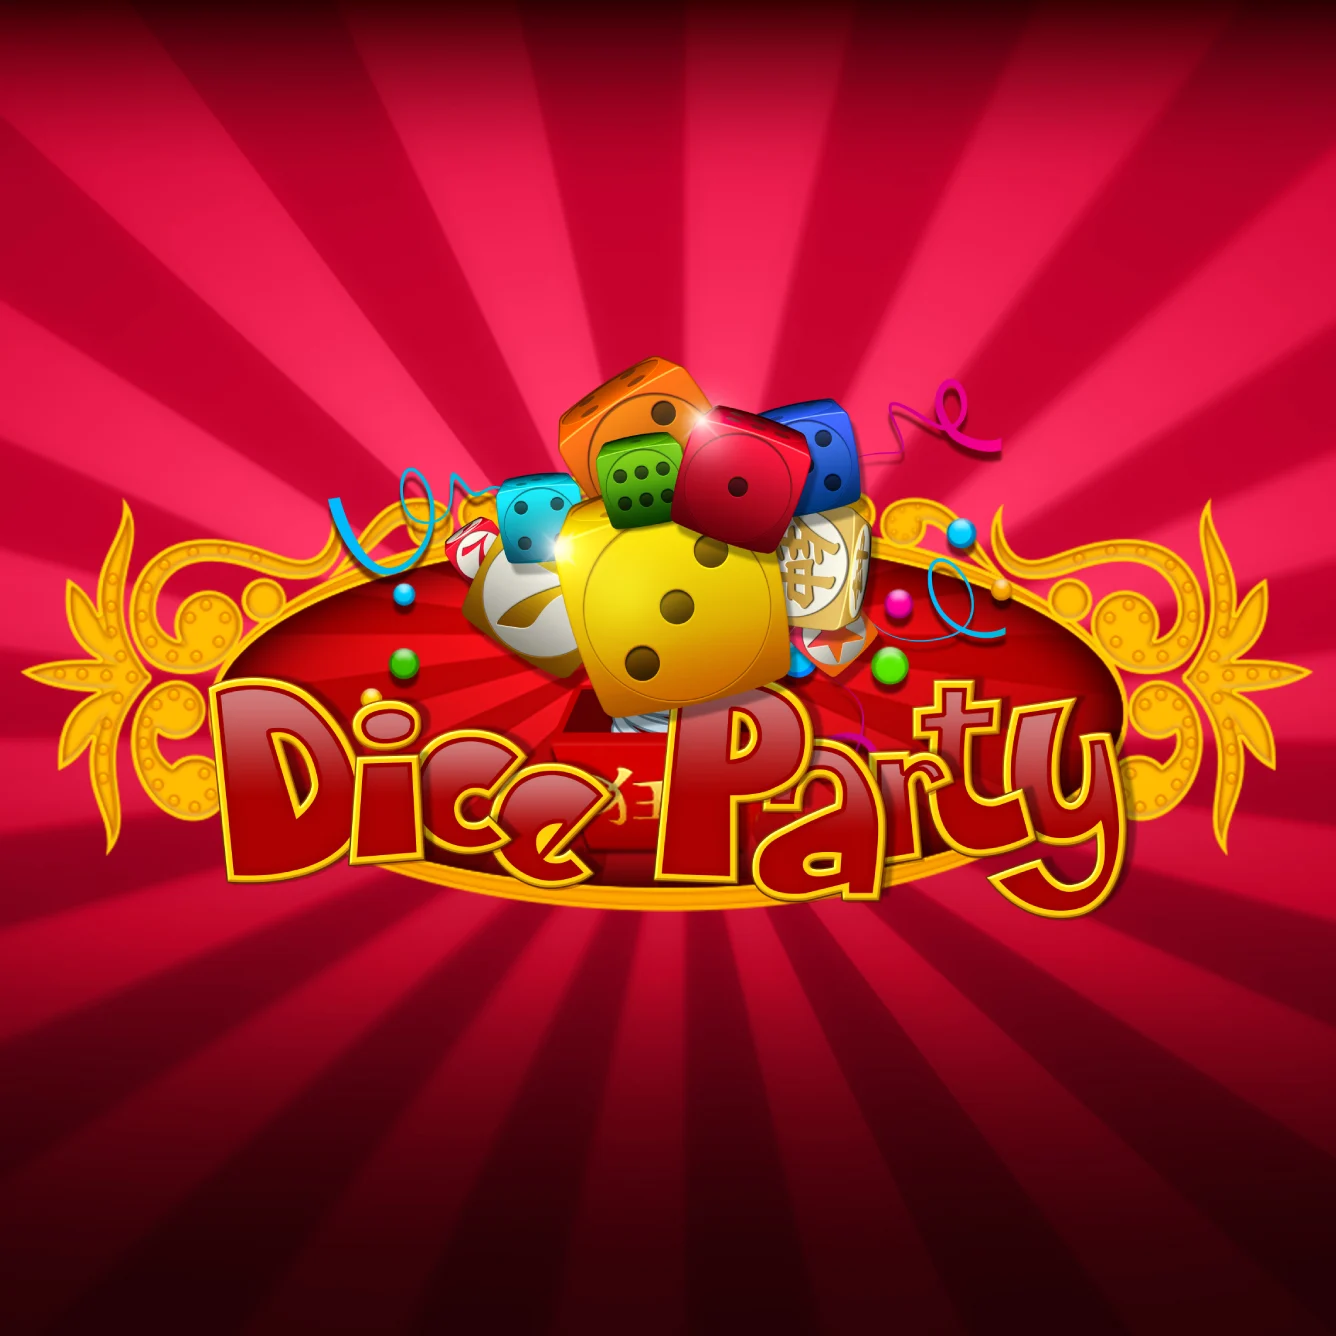 Play Dice Party on Starcasinodice.be online casino